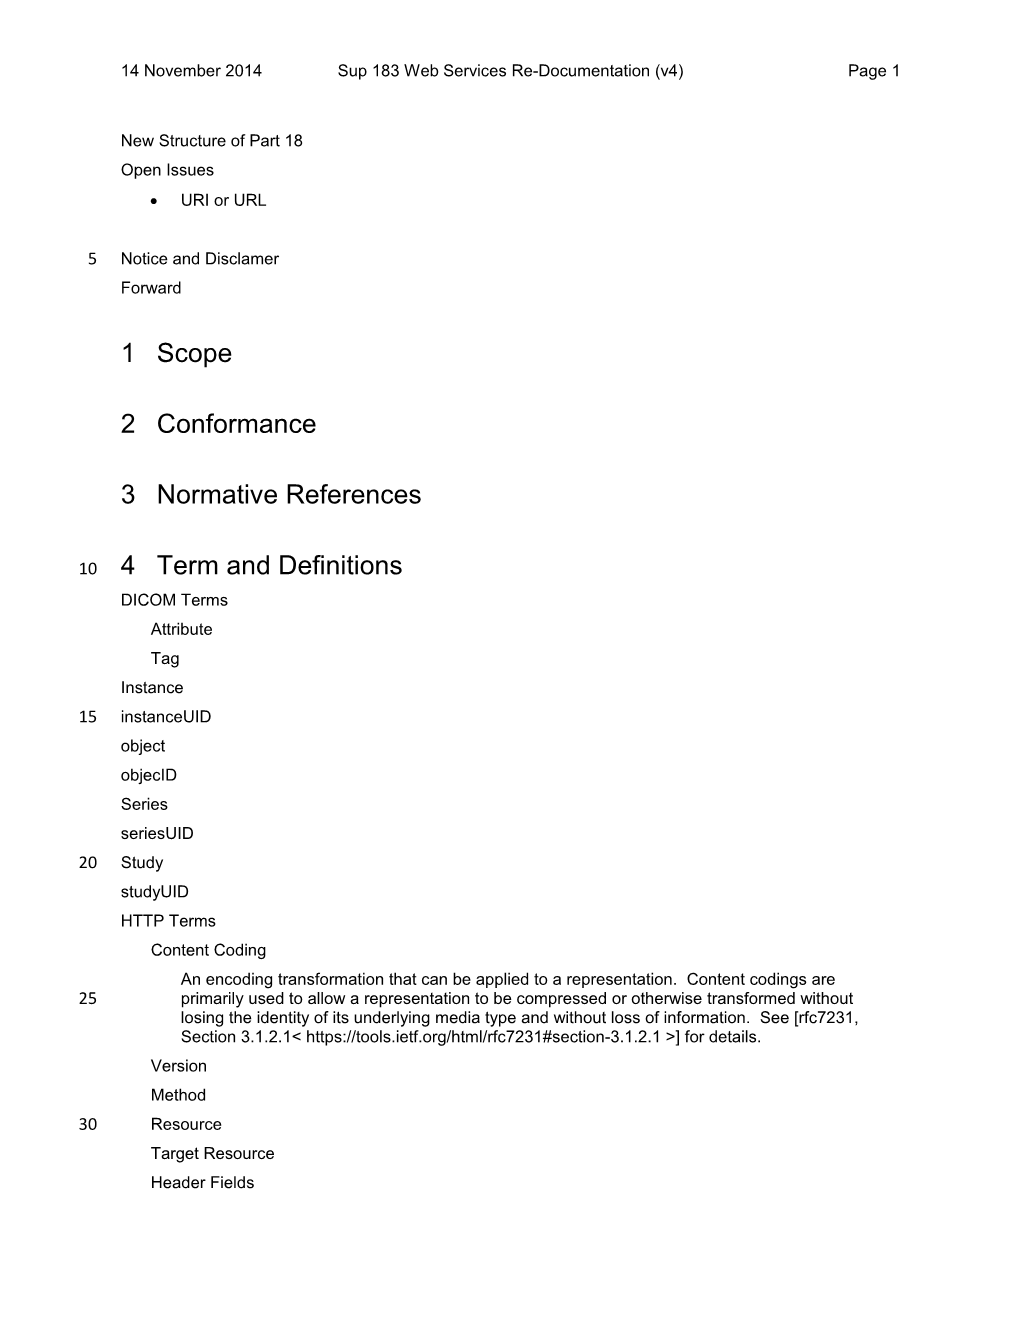 14 November 2014Sup 183 Web Services Re-Documentation (V4)Page 1